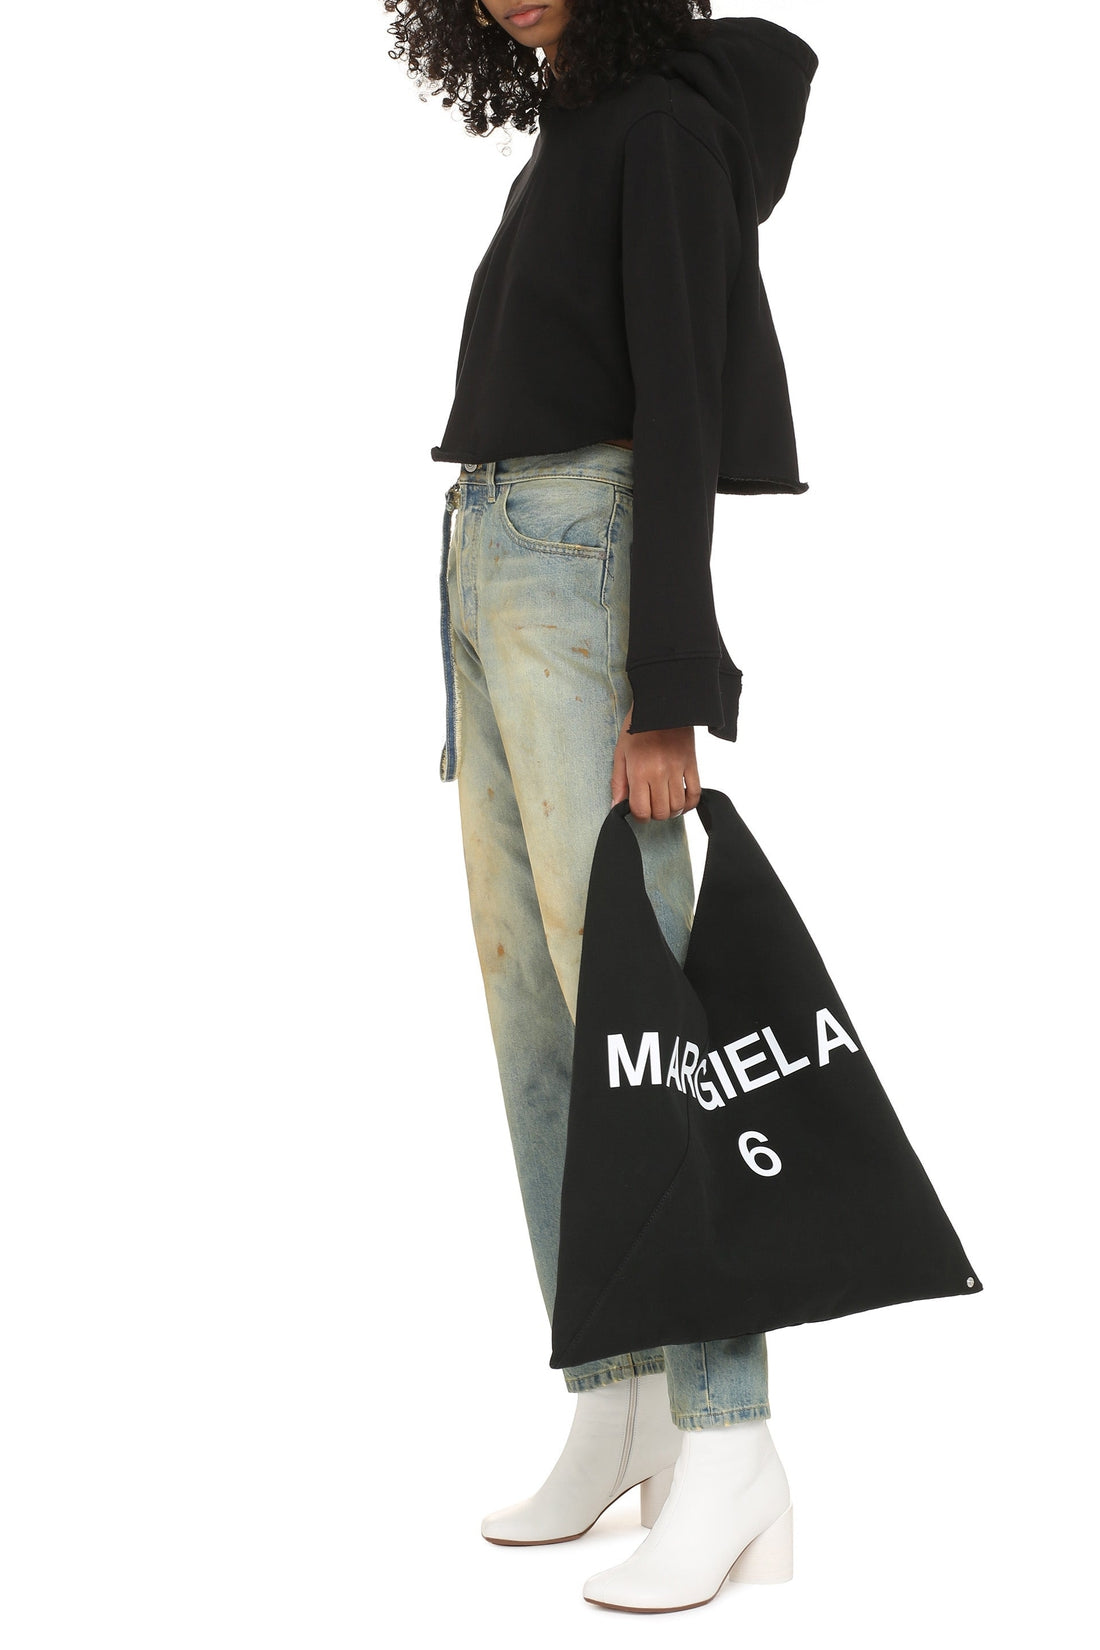 MM6 Maison Margiela-OUTLET-SALE-Cropped hoodie-ARCHIVIST